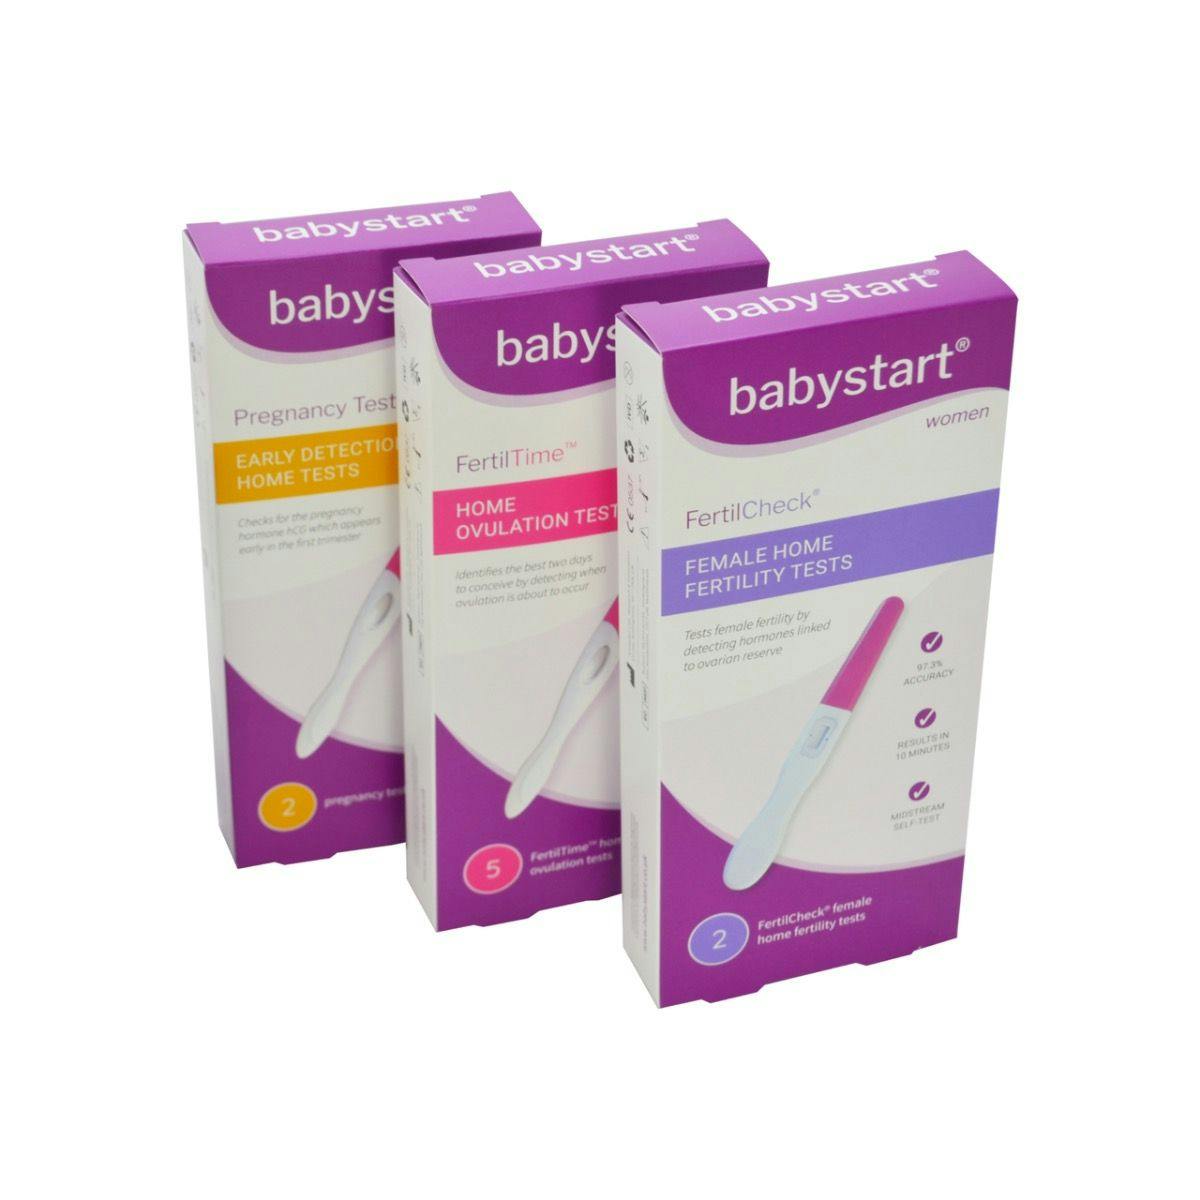 Babystart Female Fertility Test Kit Bundle